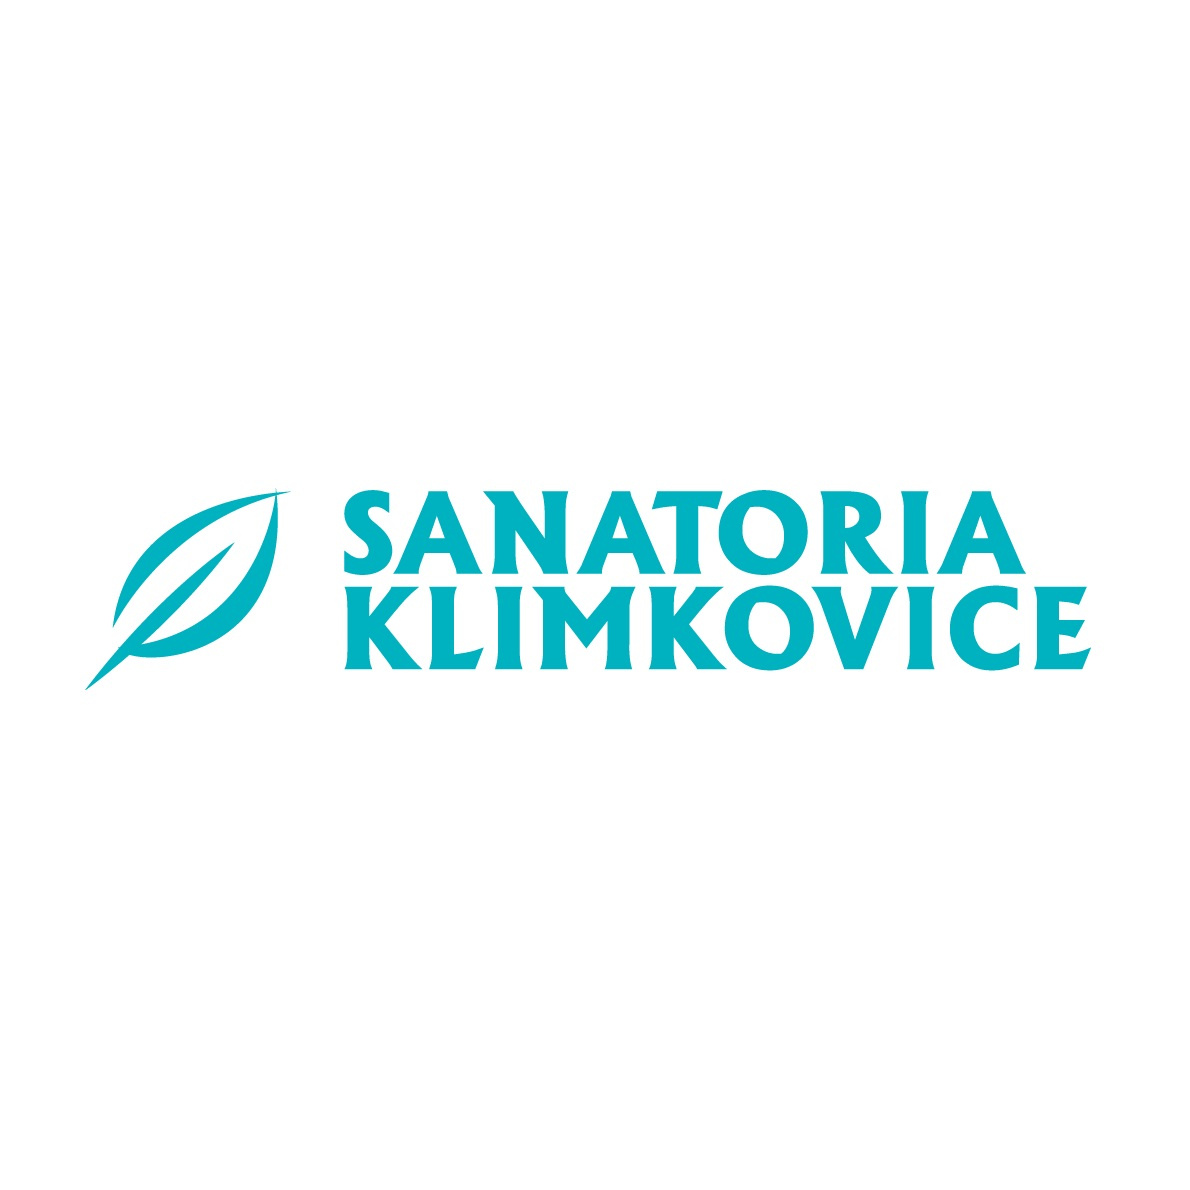 nadace-zm-logo-sanatoria-klimkovice-2.jpg